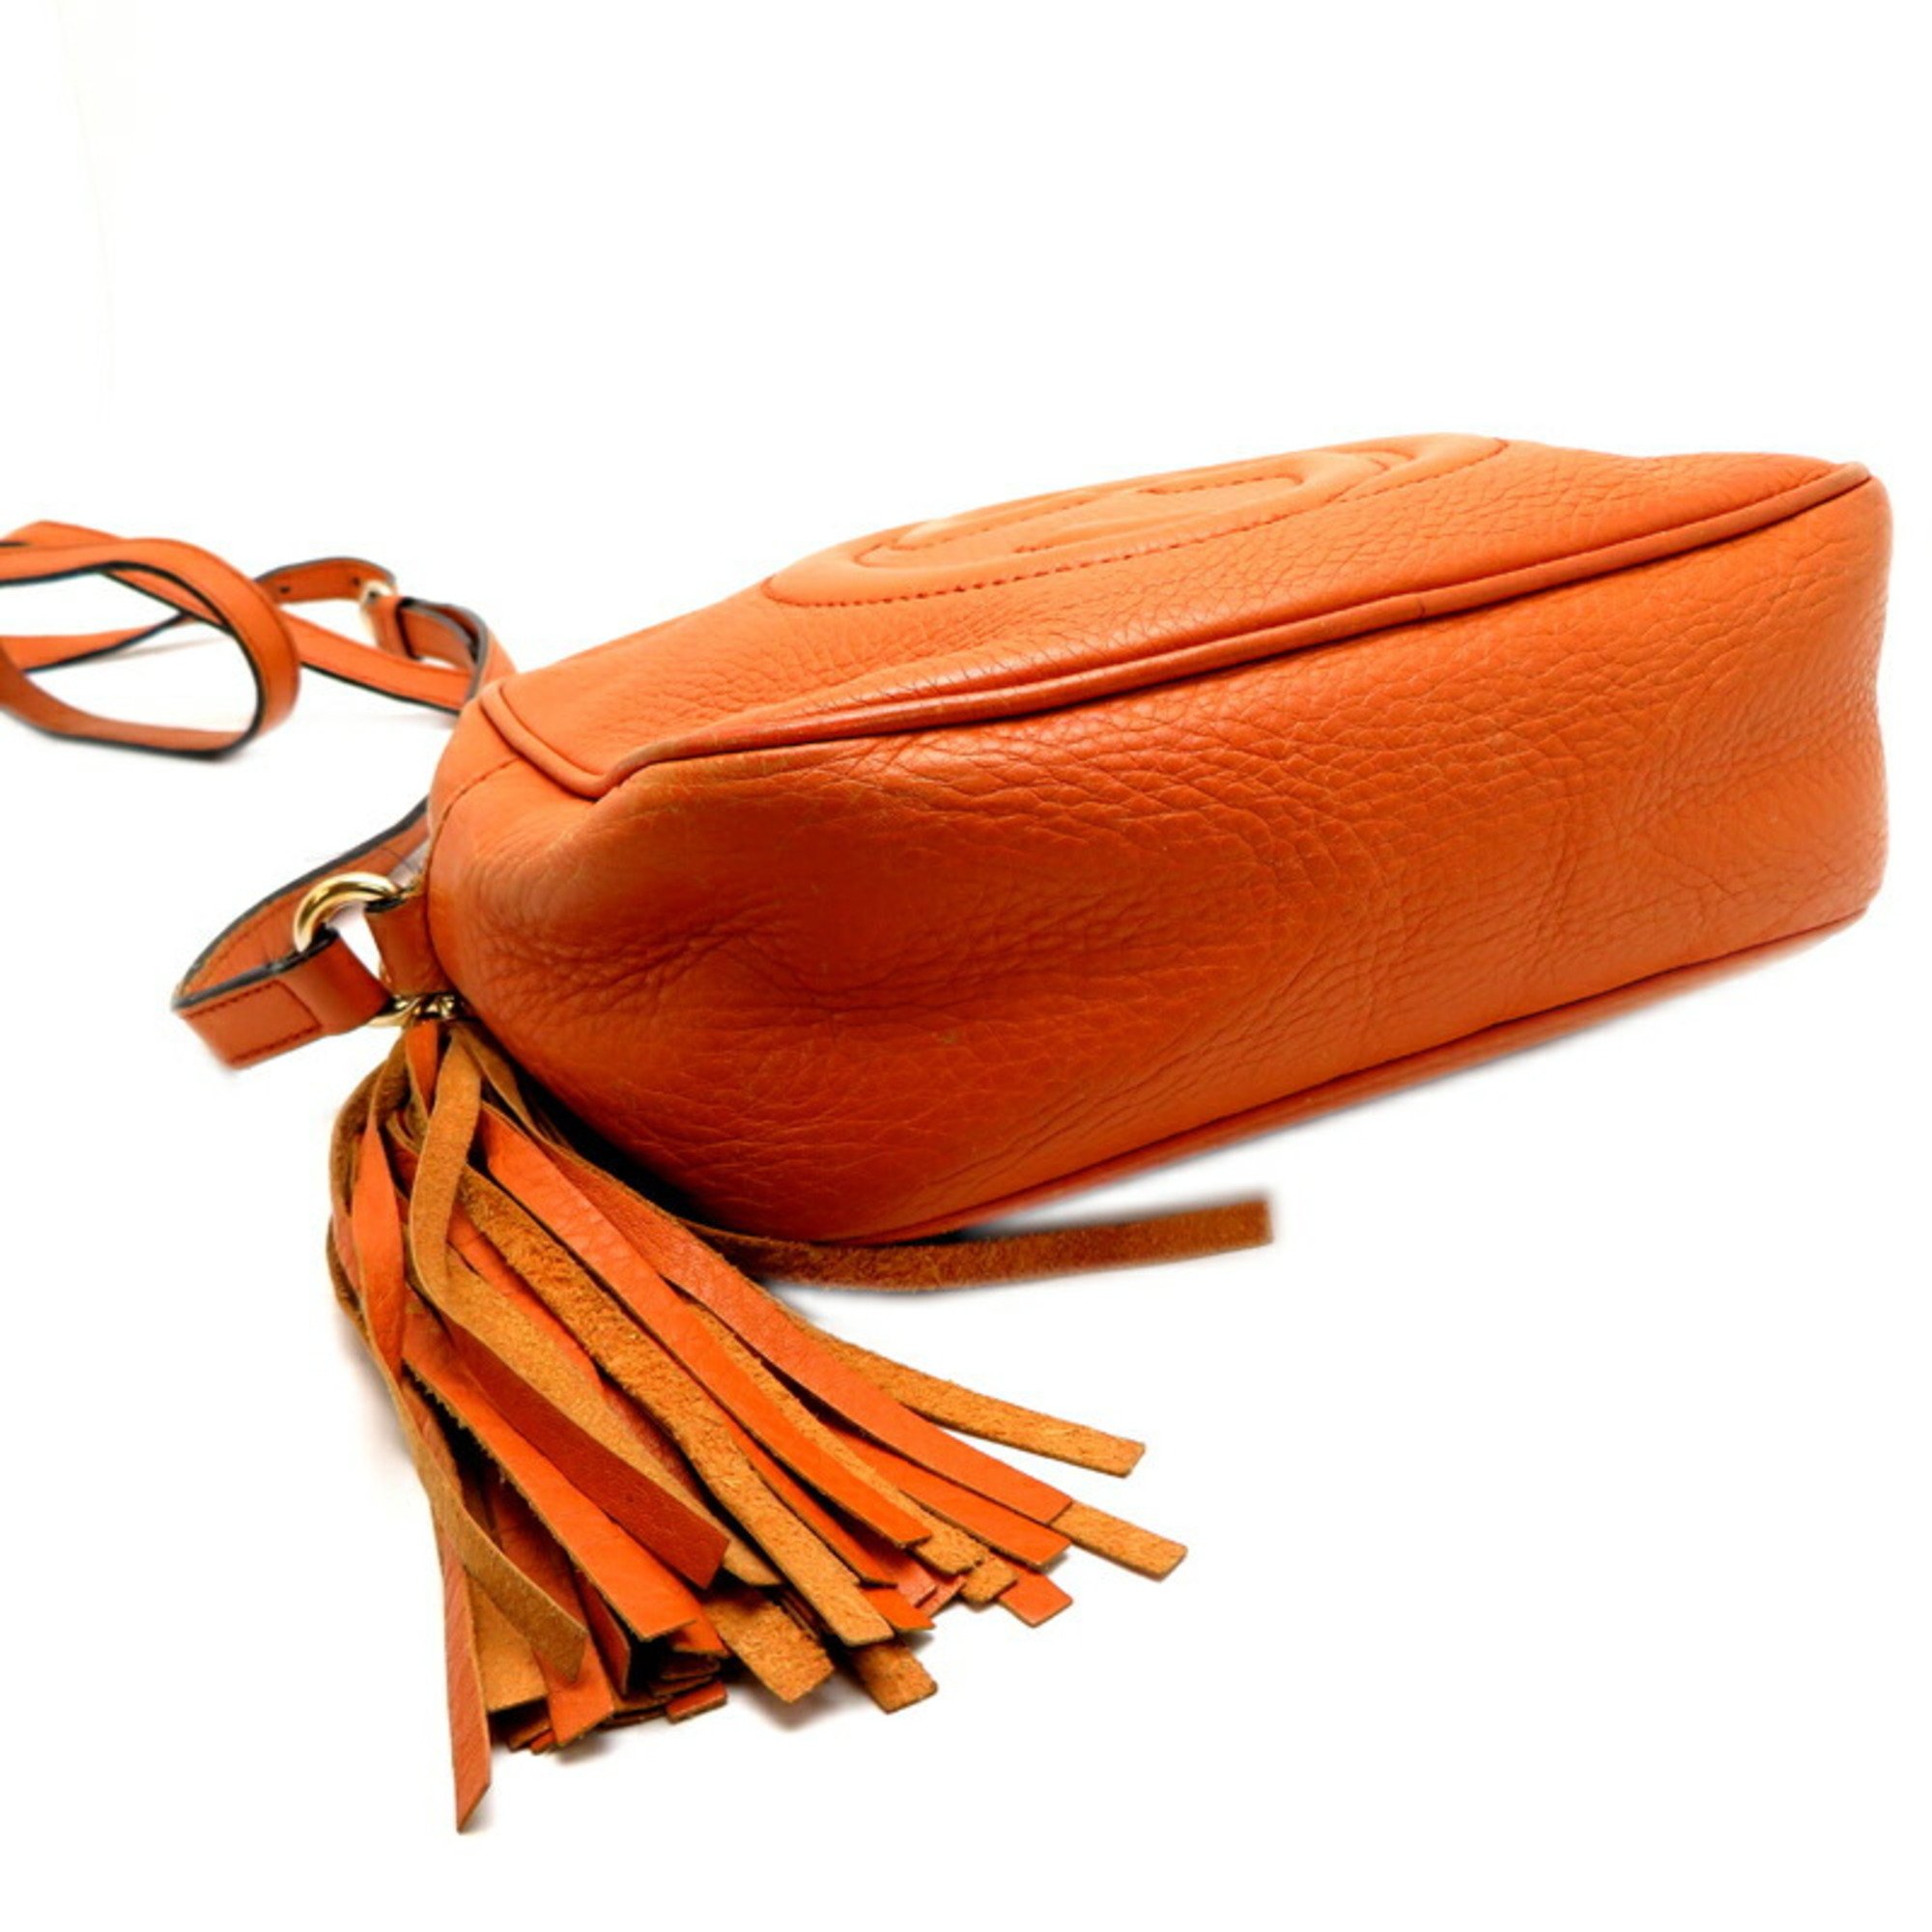 Gucci Soho Small Disco Women's Shoulder Bag 308364 Leather Orange